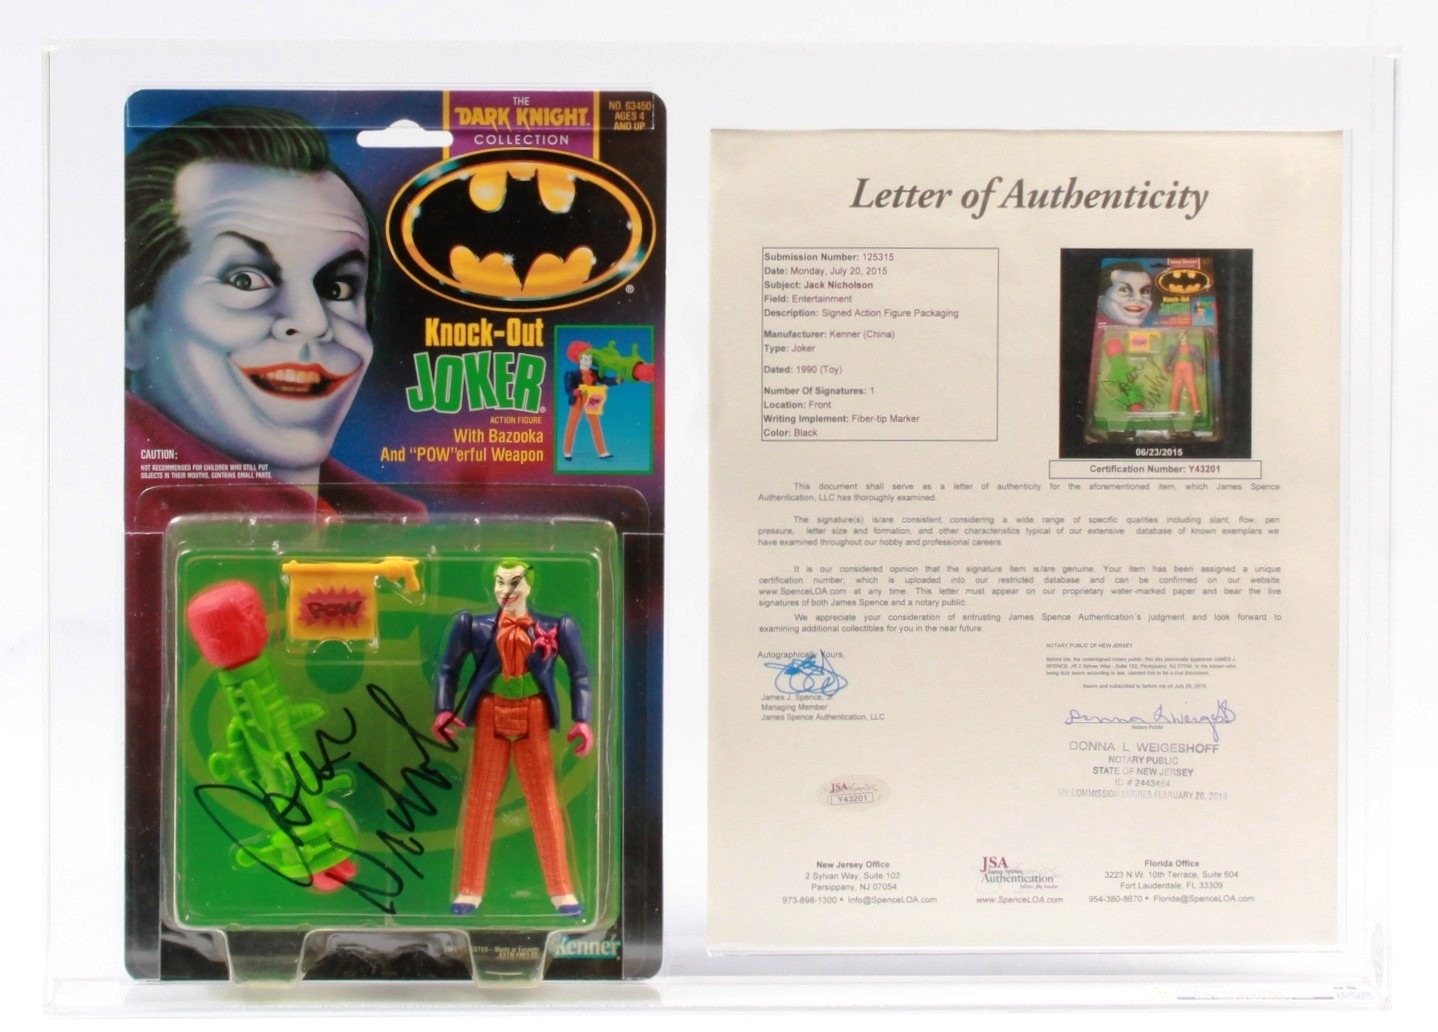 CUSTOM 1991 Kenner Batman Dark Knight Collection Carded Action